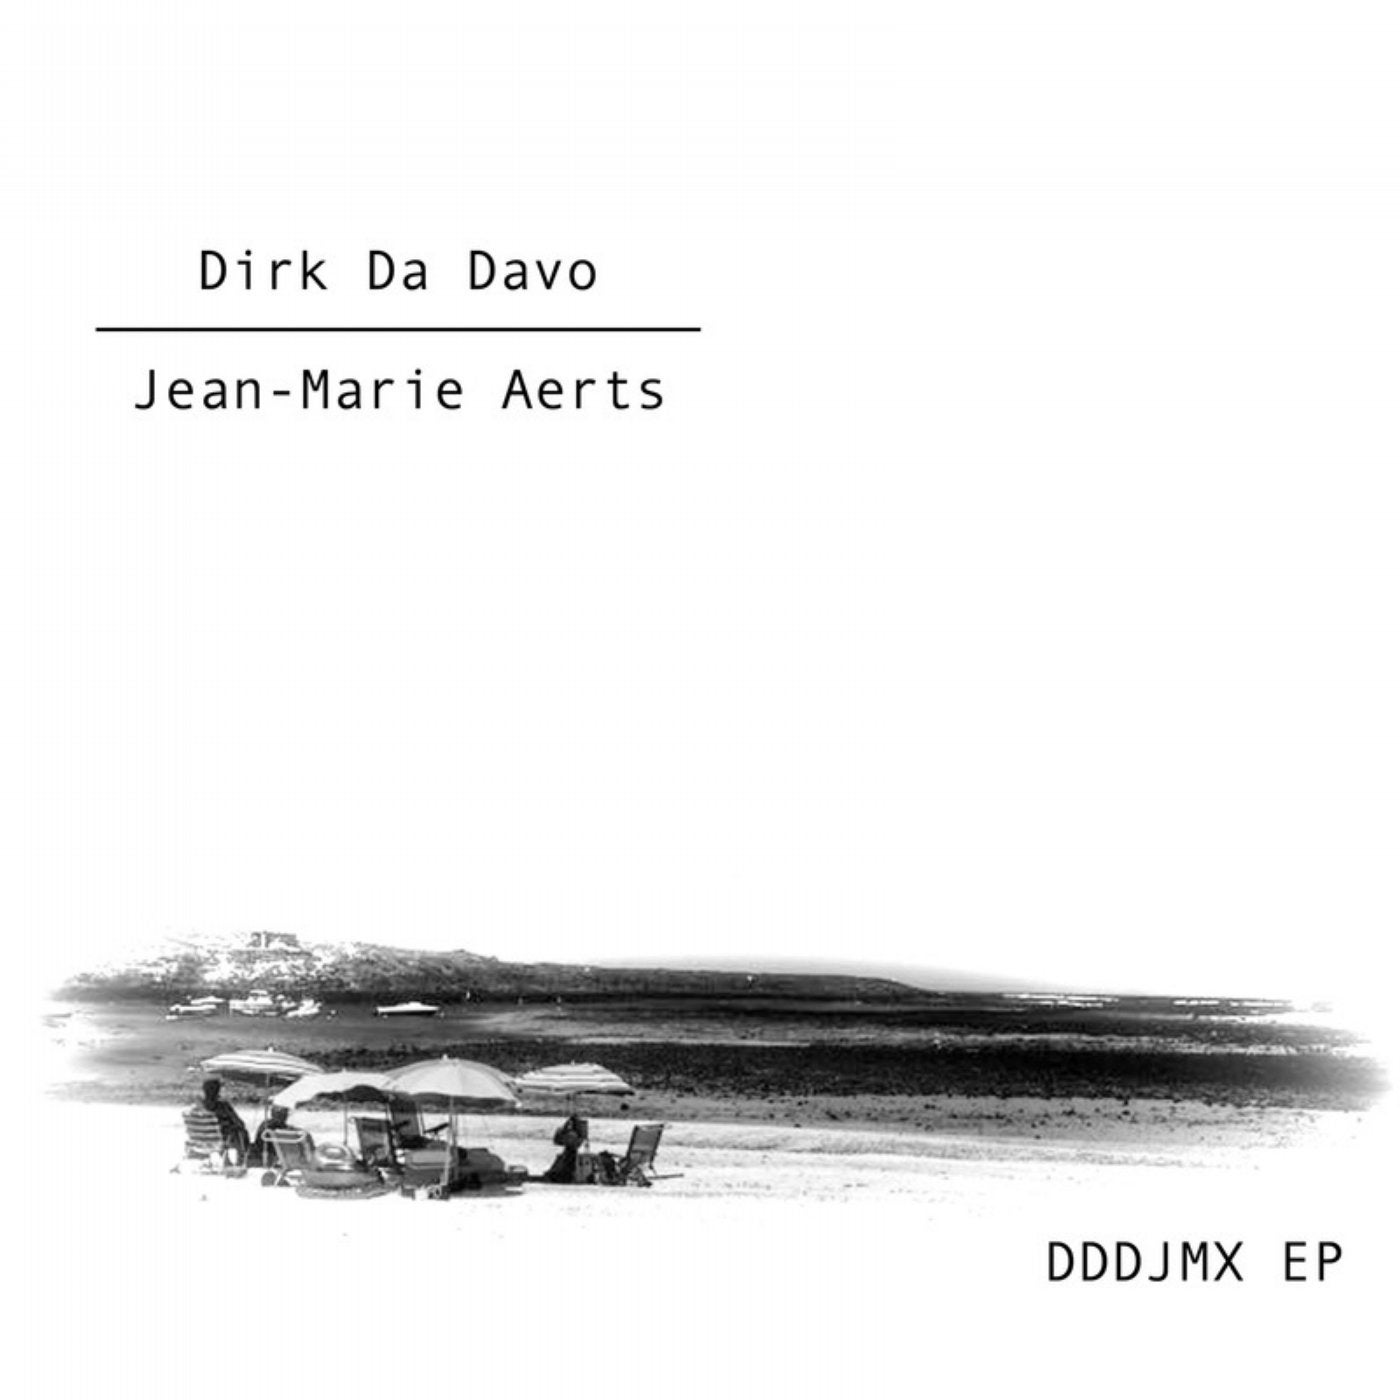 DDDJMX  EP